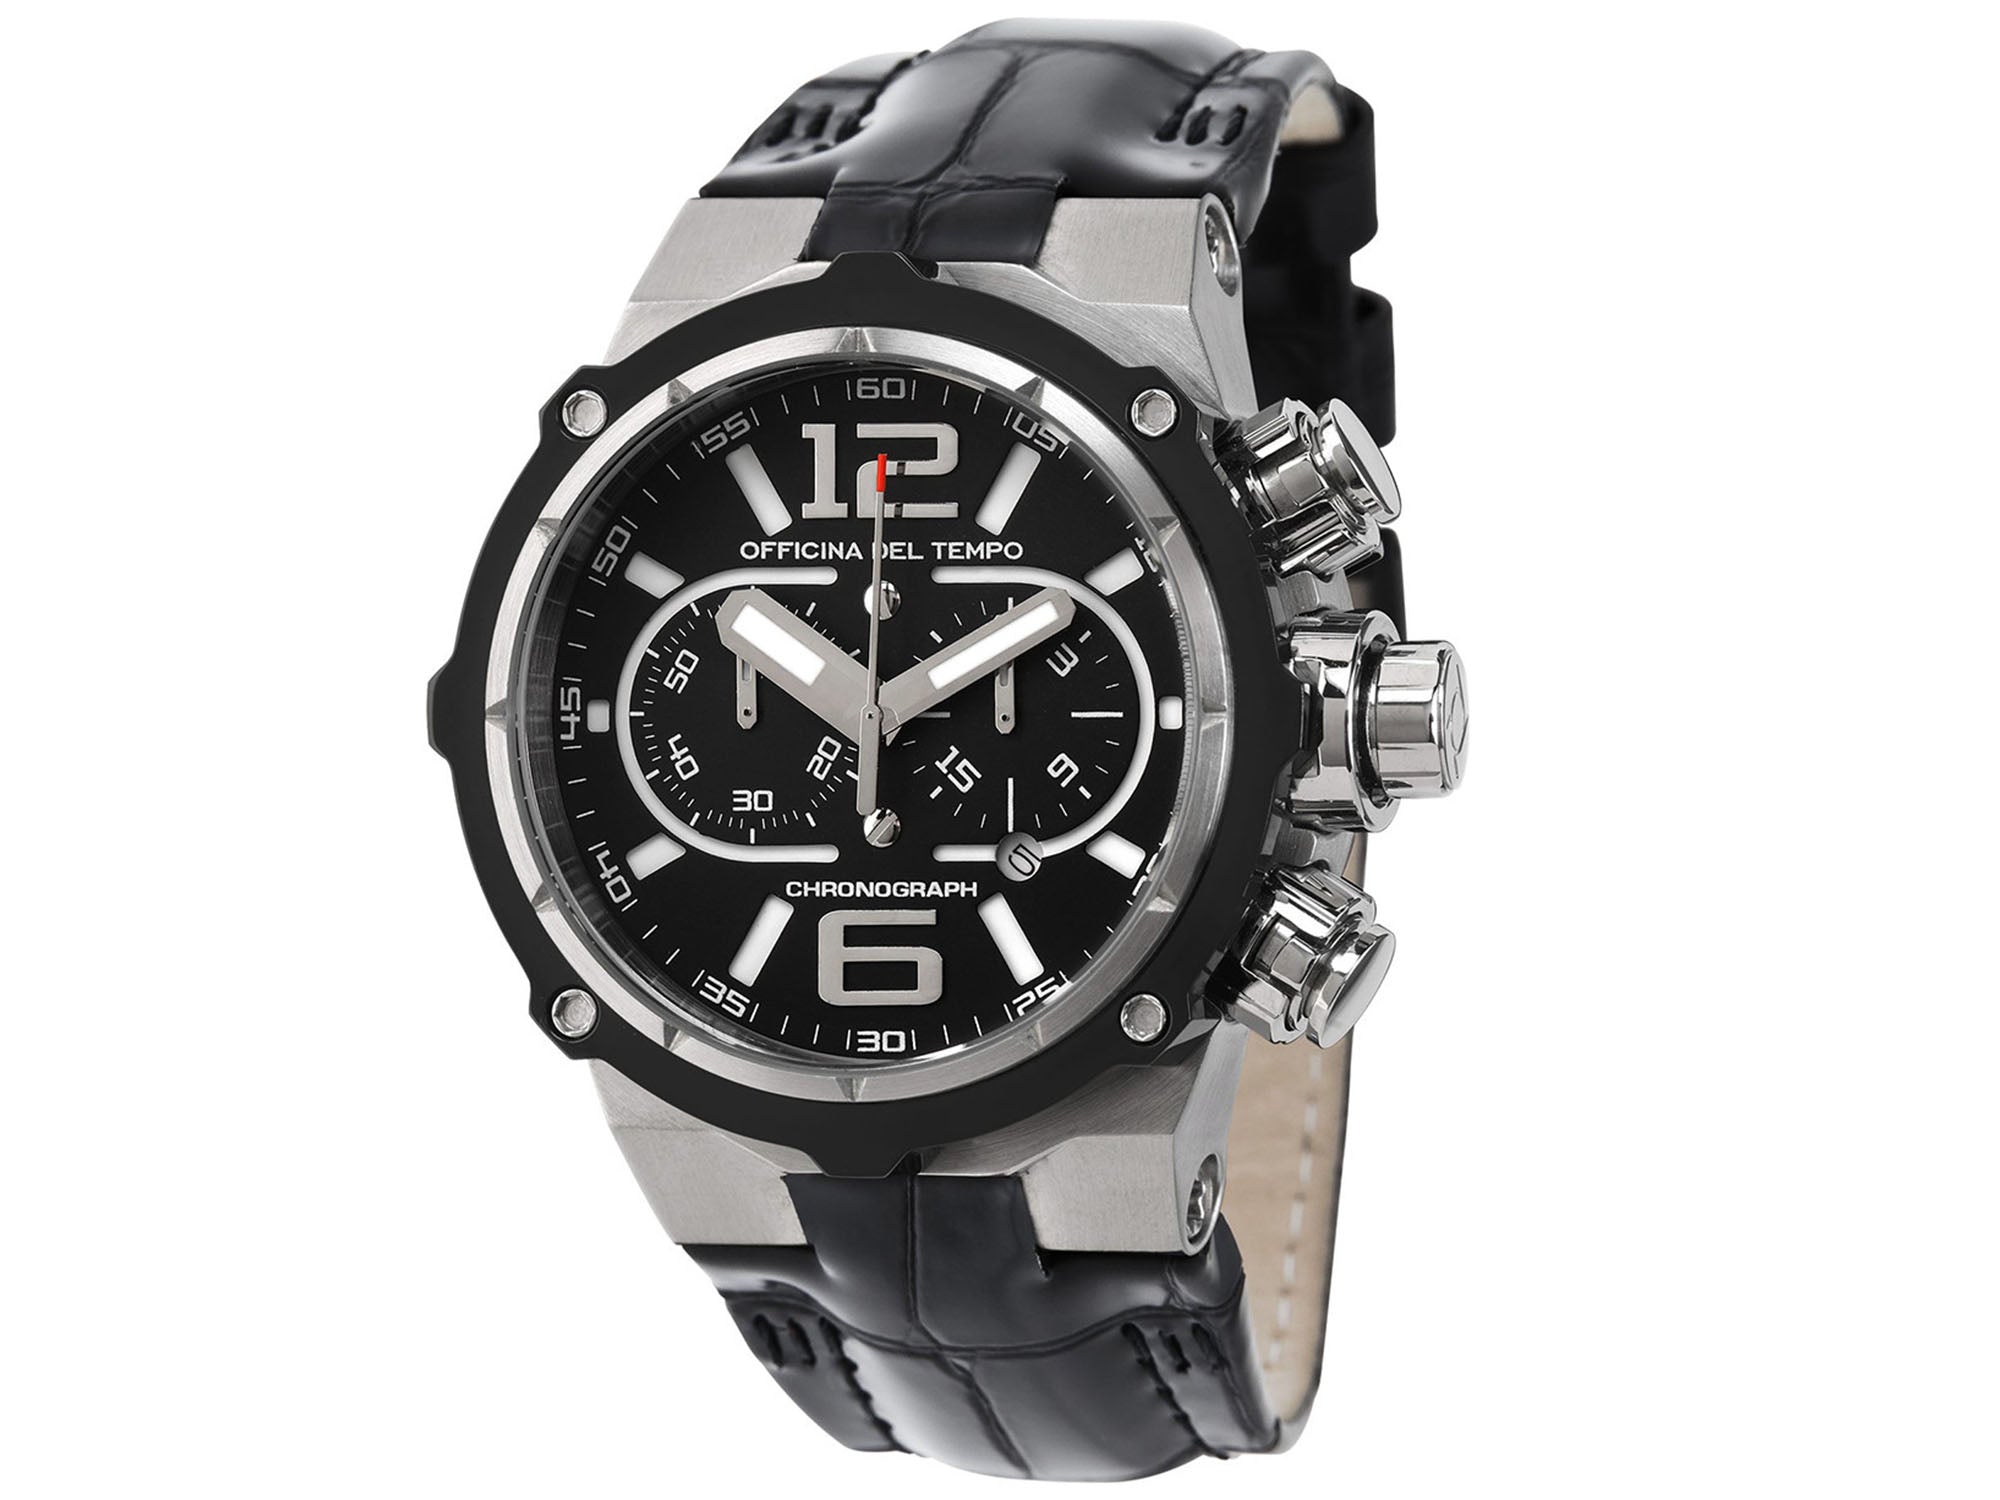 Brands4u - Italian brand Patek Louis watches are on hot